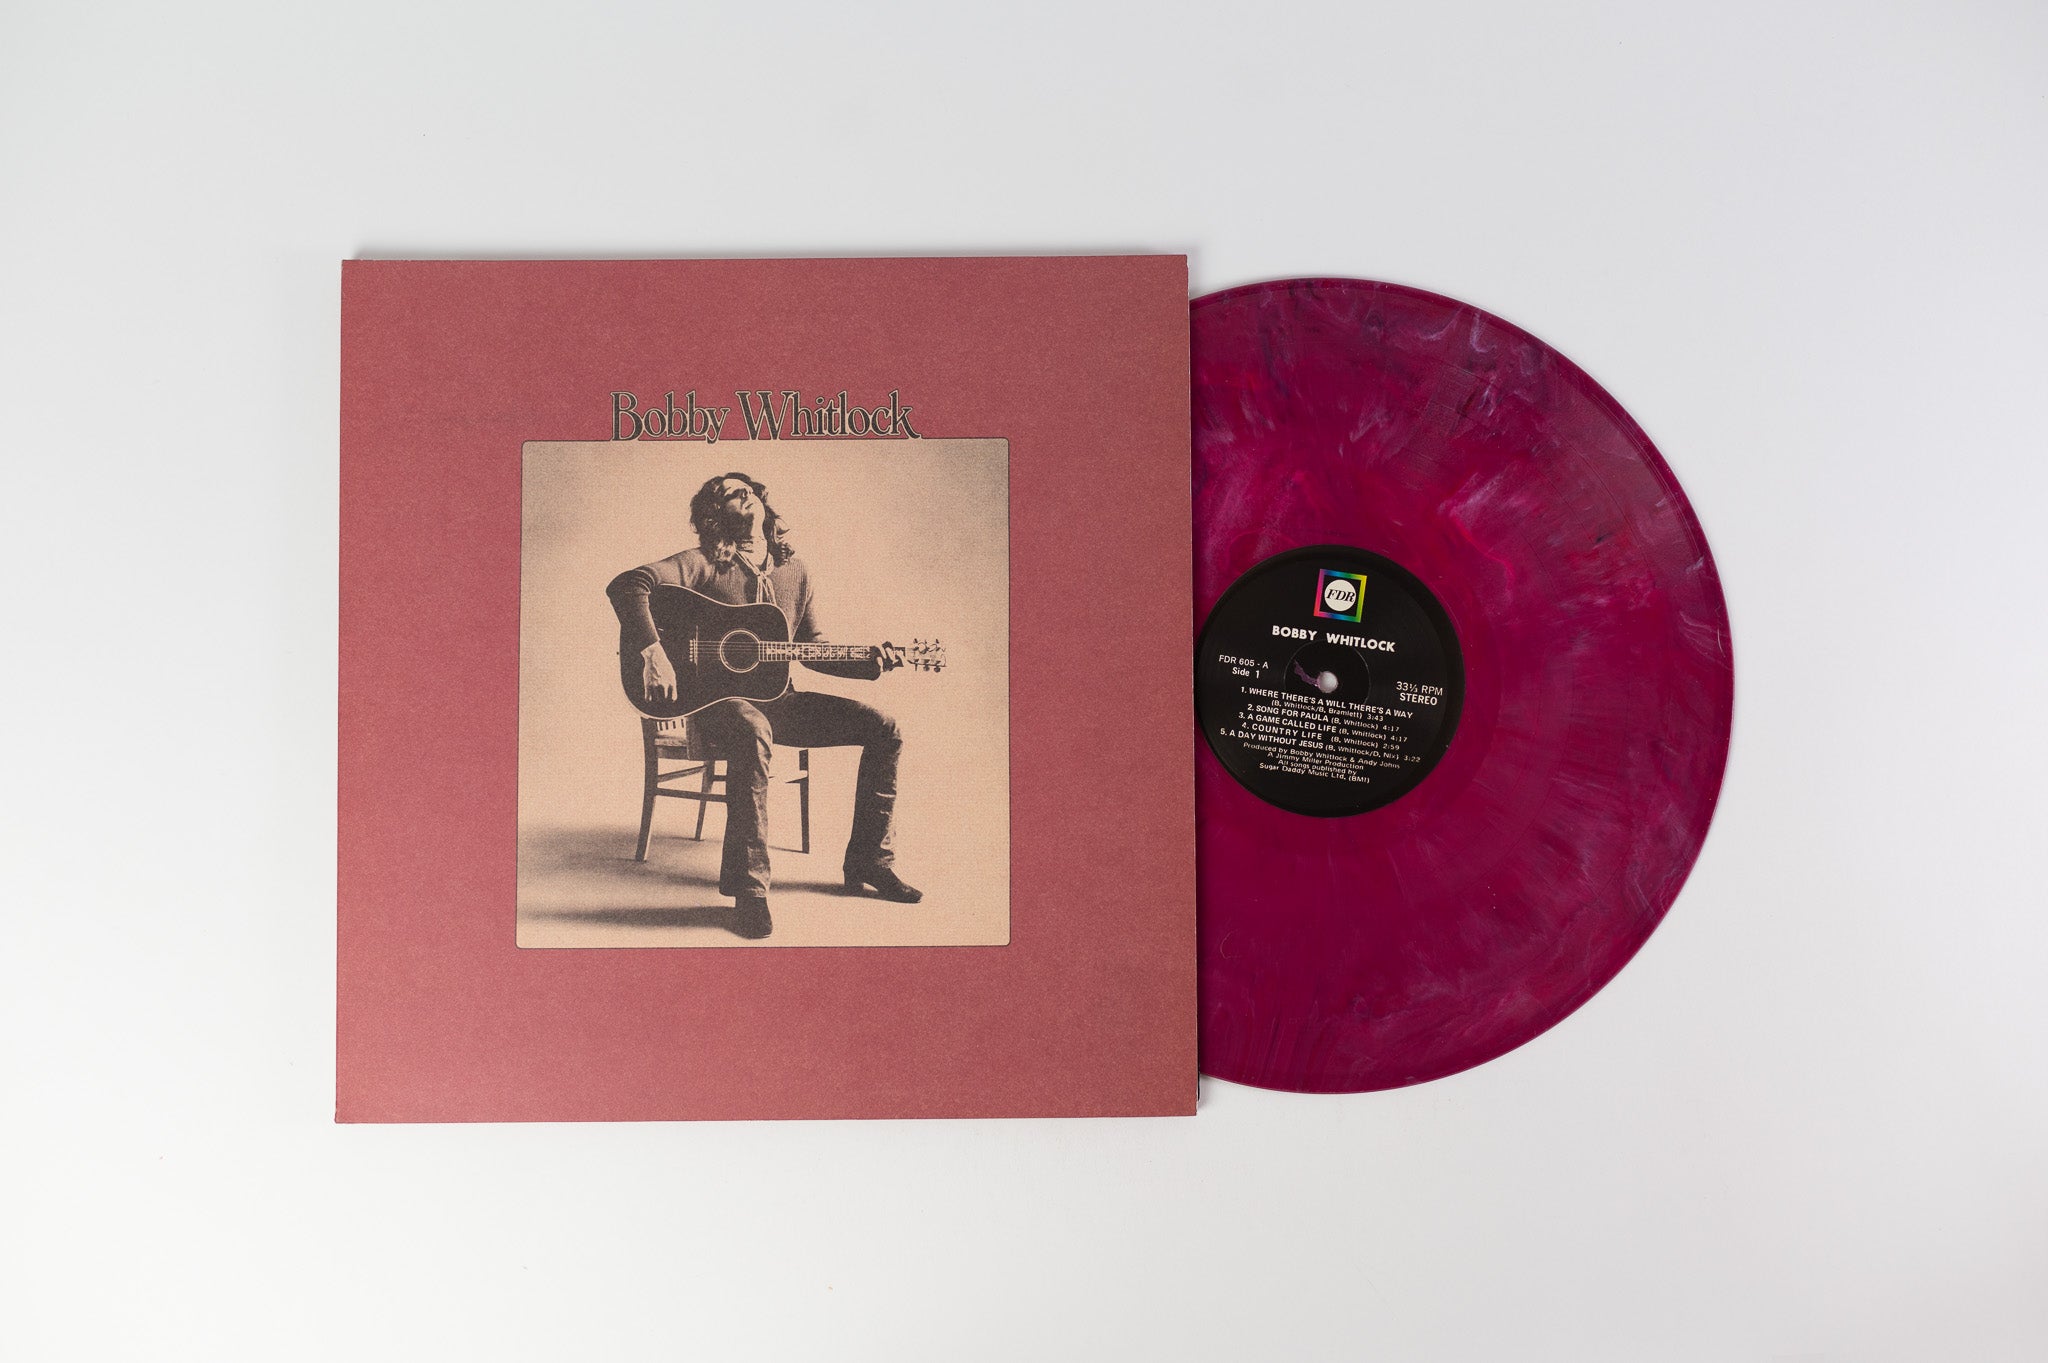 Bobby Whitlock - Bobby Whitlock on Future Days Recordings - Merlot Marble Colored Vinyl